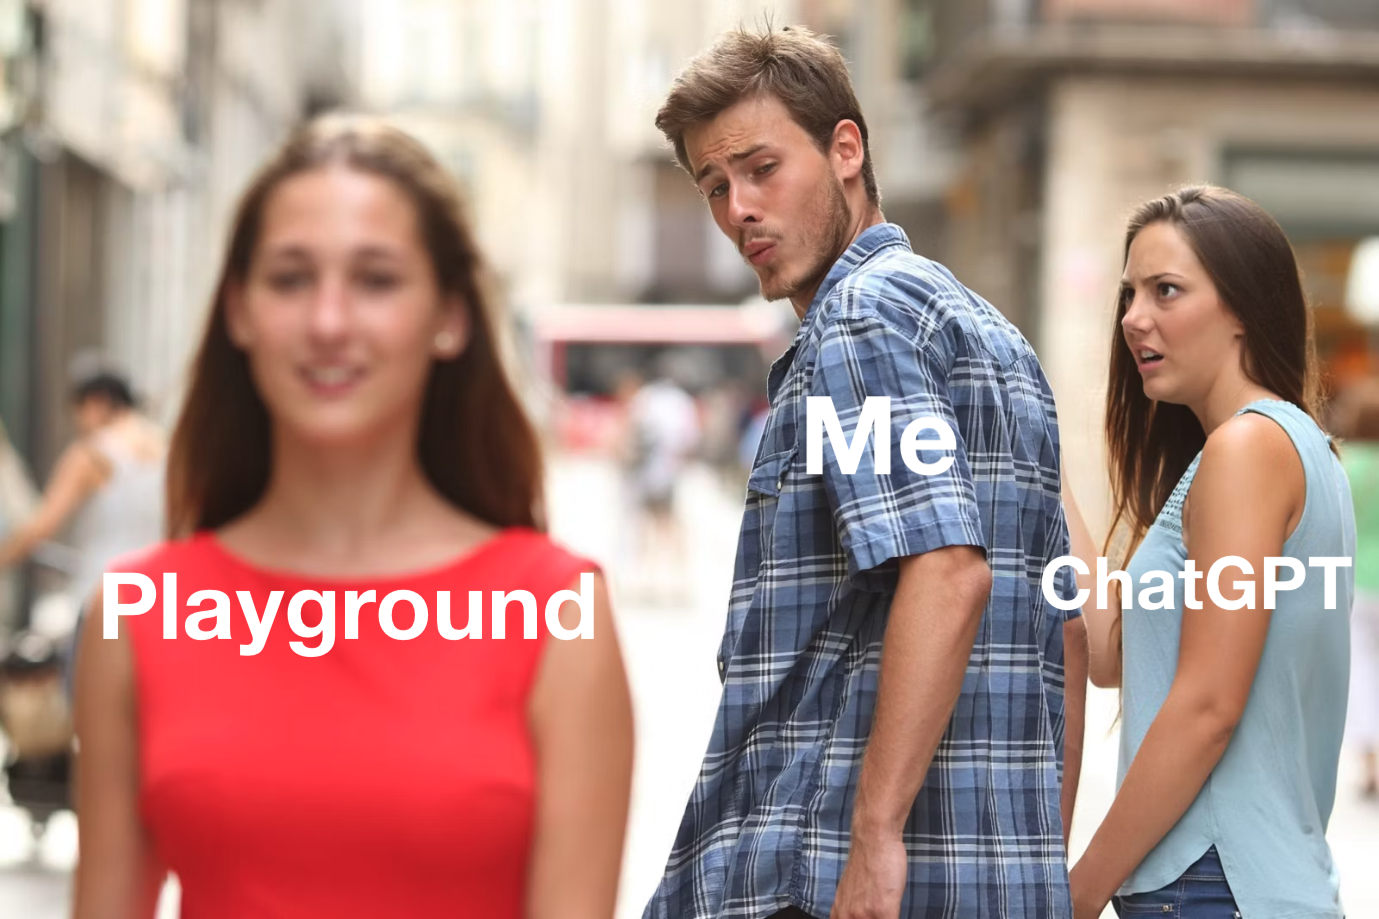 meme depicting ChatGPT vs Playground